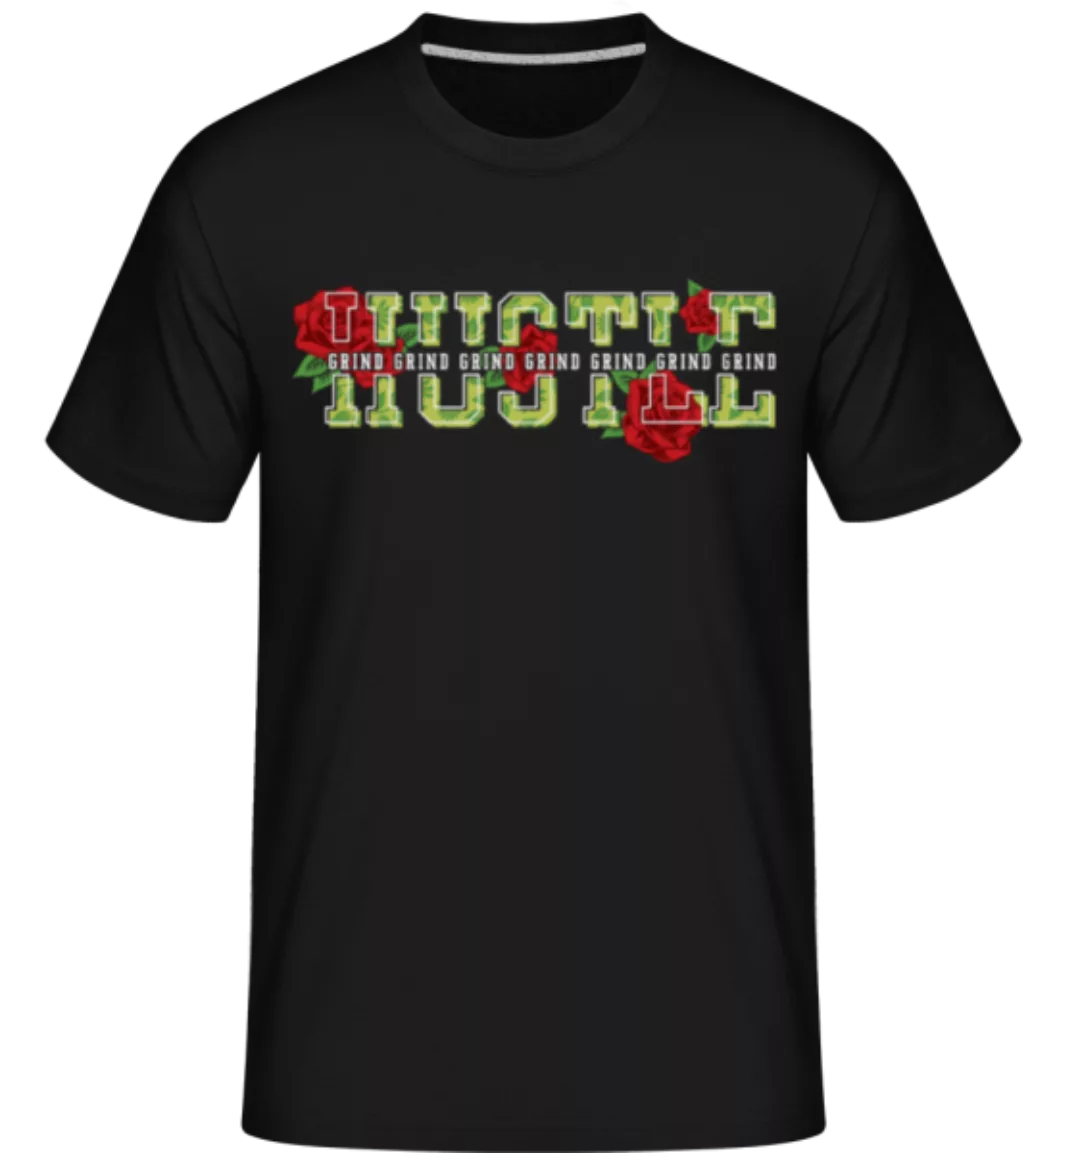 Hustle · Shirtinator Männer T-Shirt günstig online kaufen